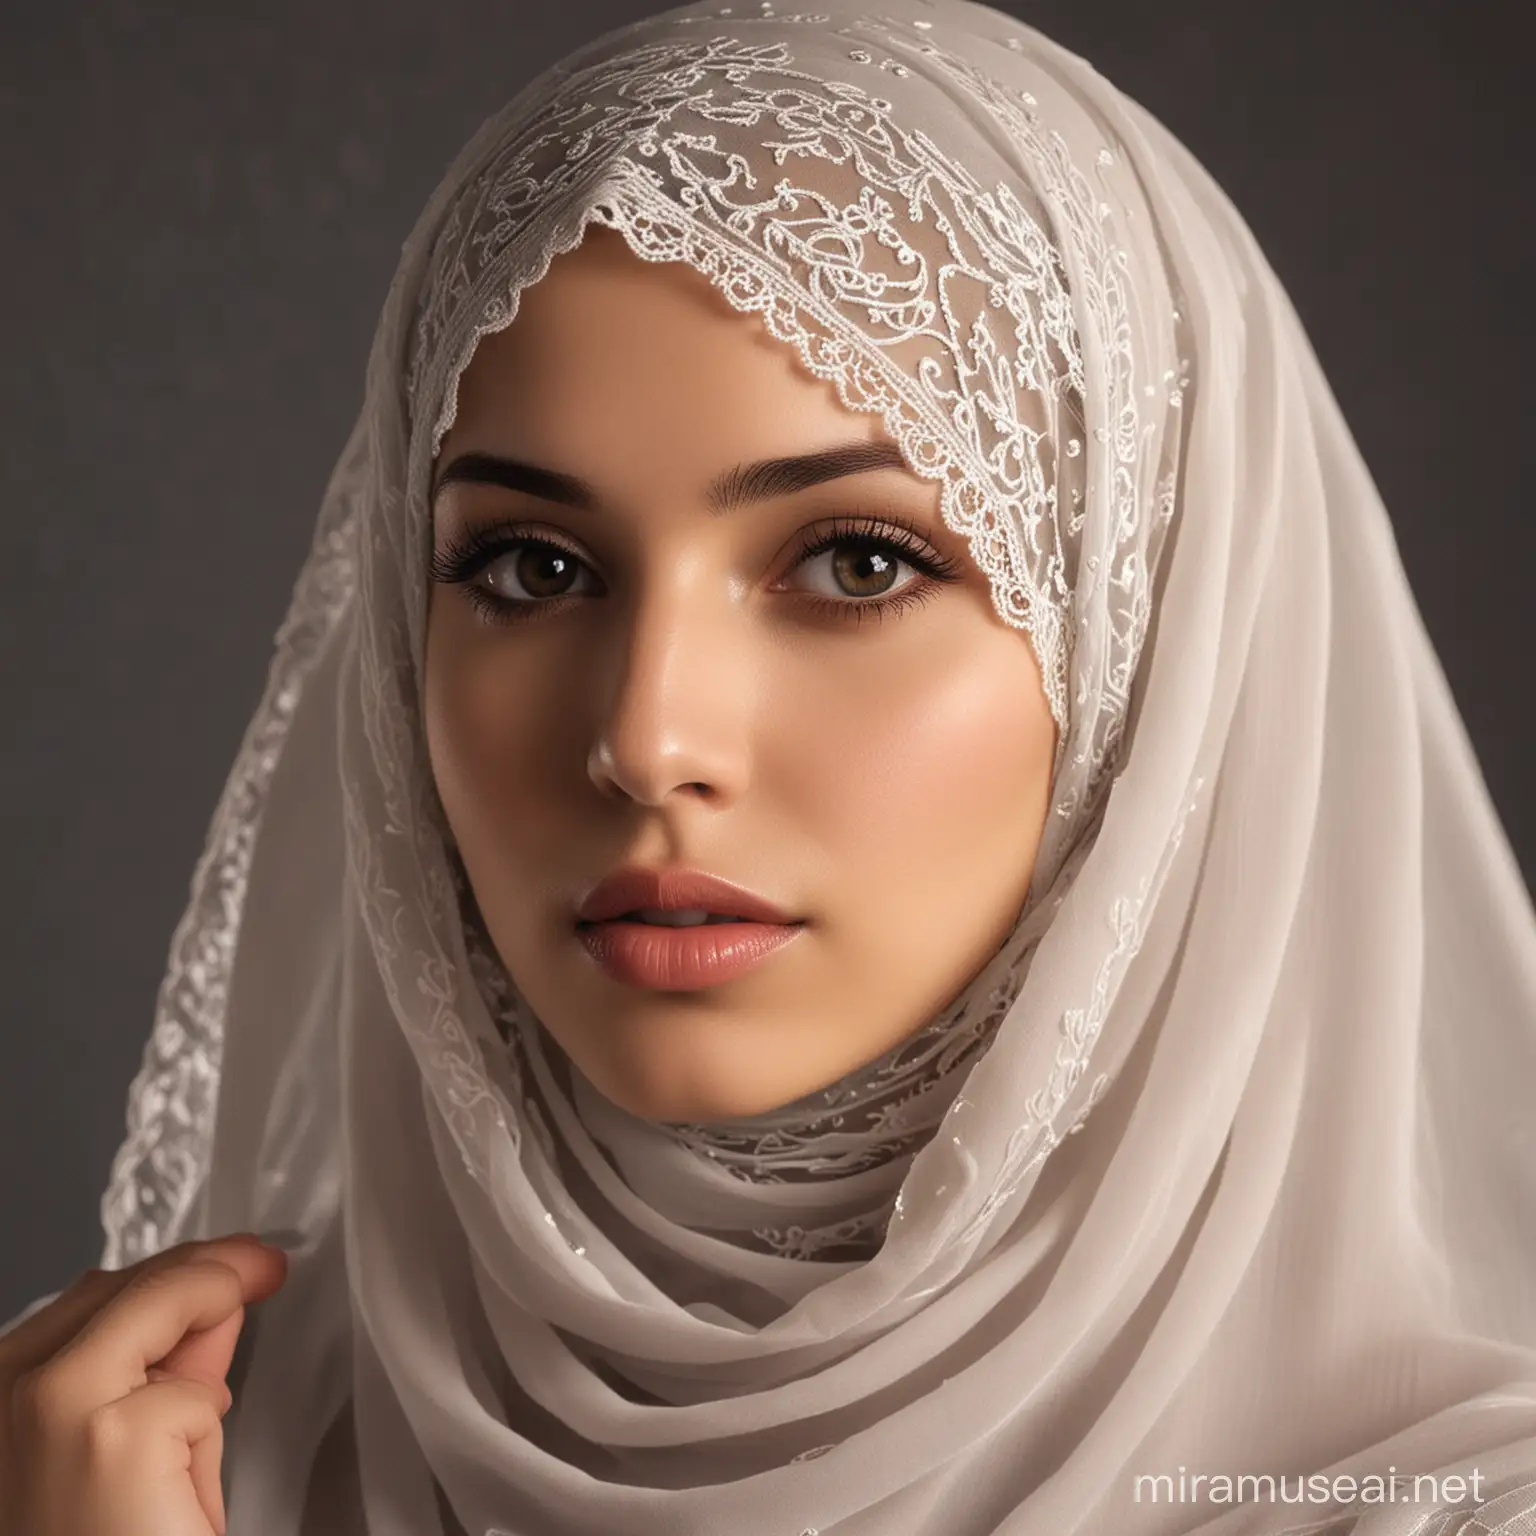 Veiled Muslim Woman Awakening to a New Identity